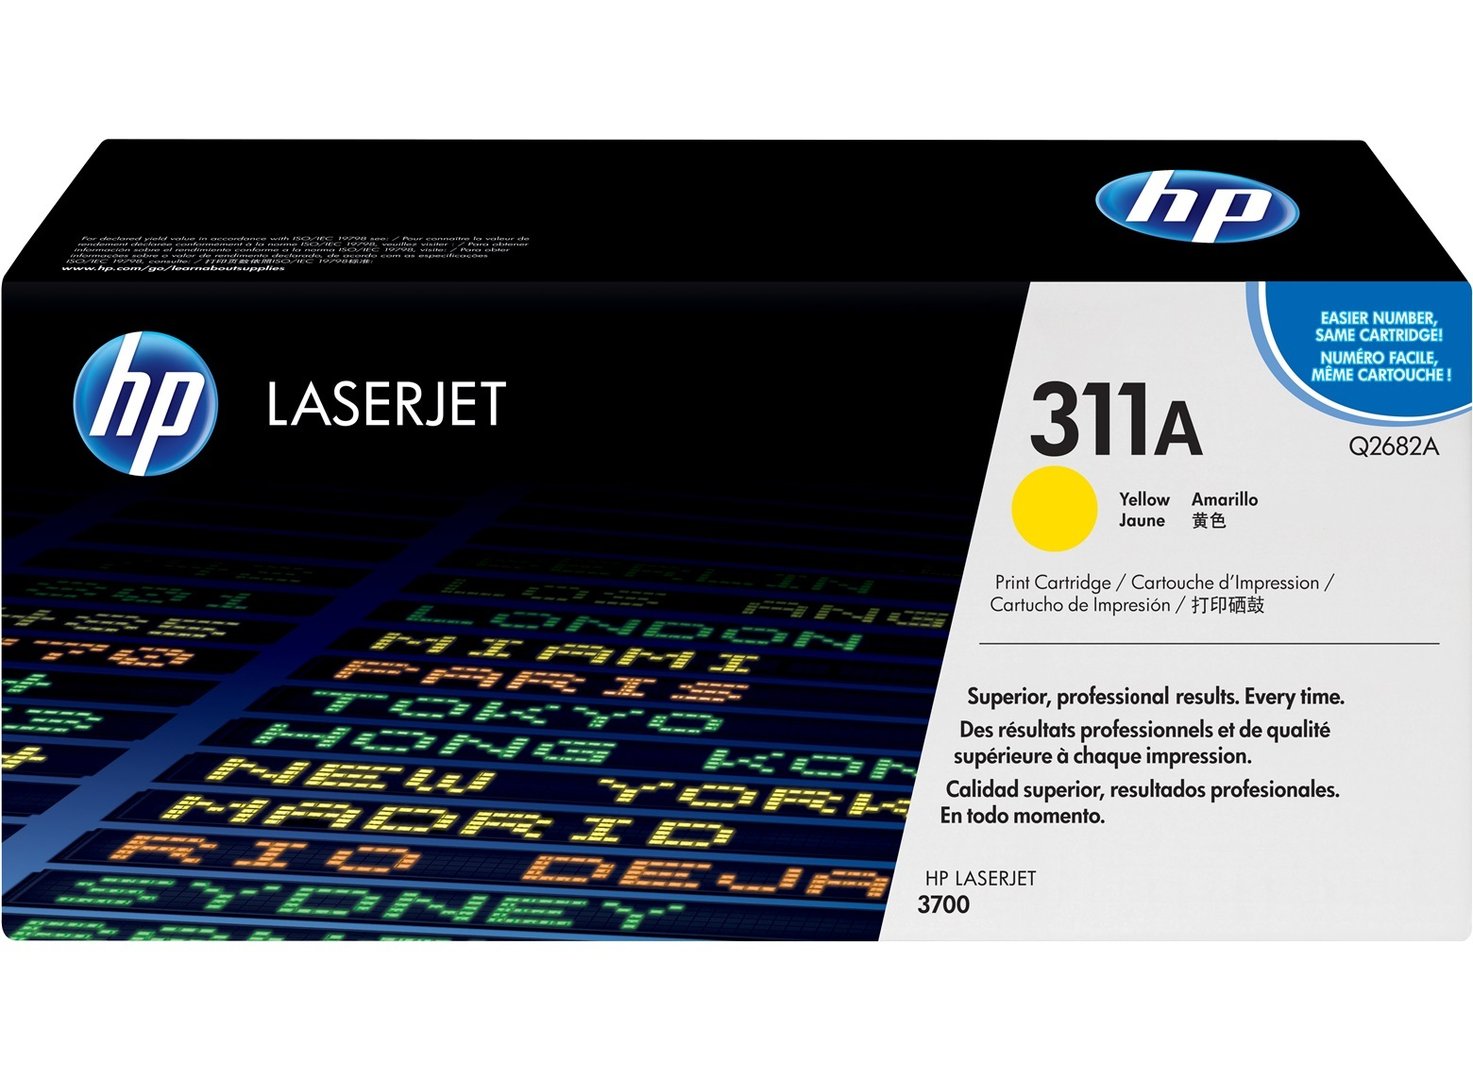 HP 311A Yellow Laser Toner Cartridge - Q2682A (Q2682A)